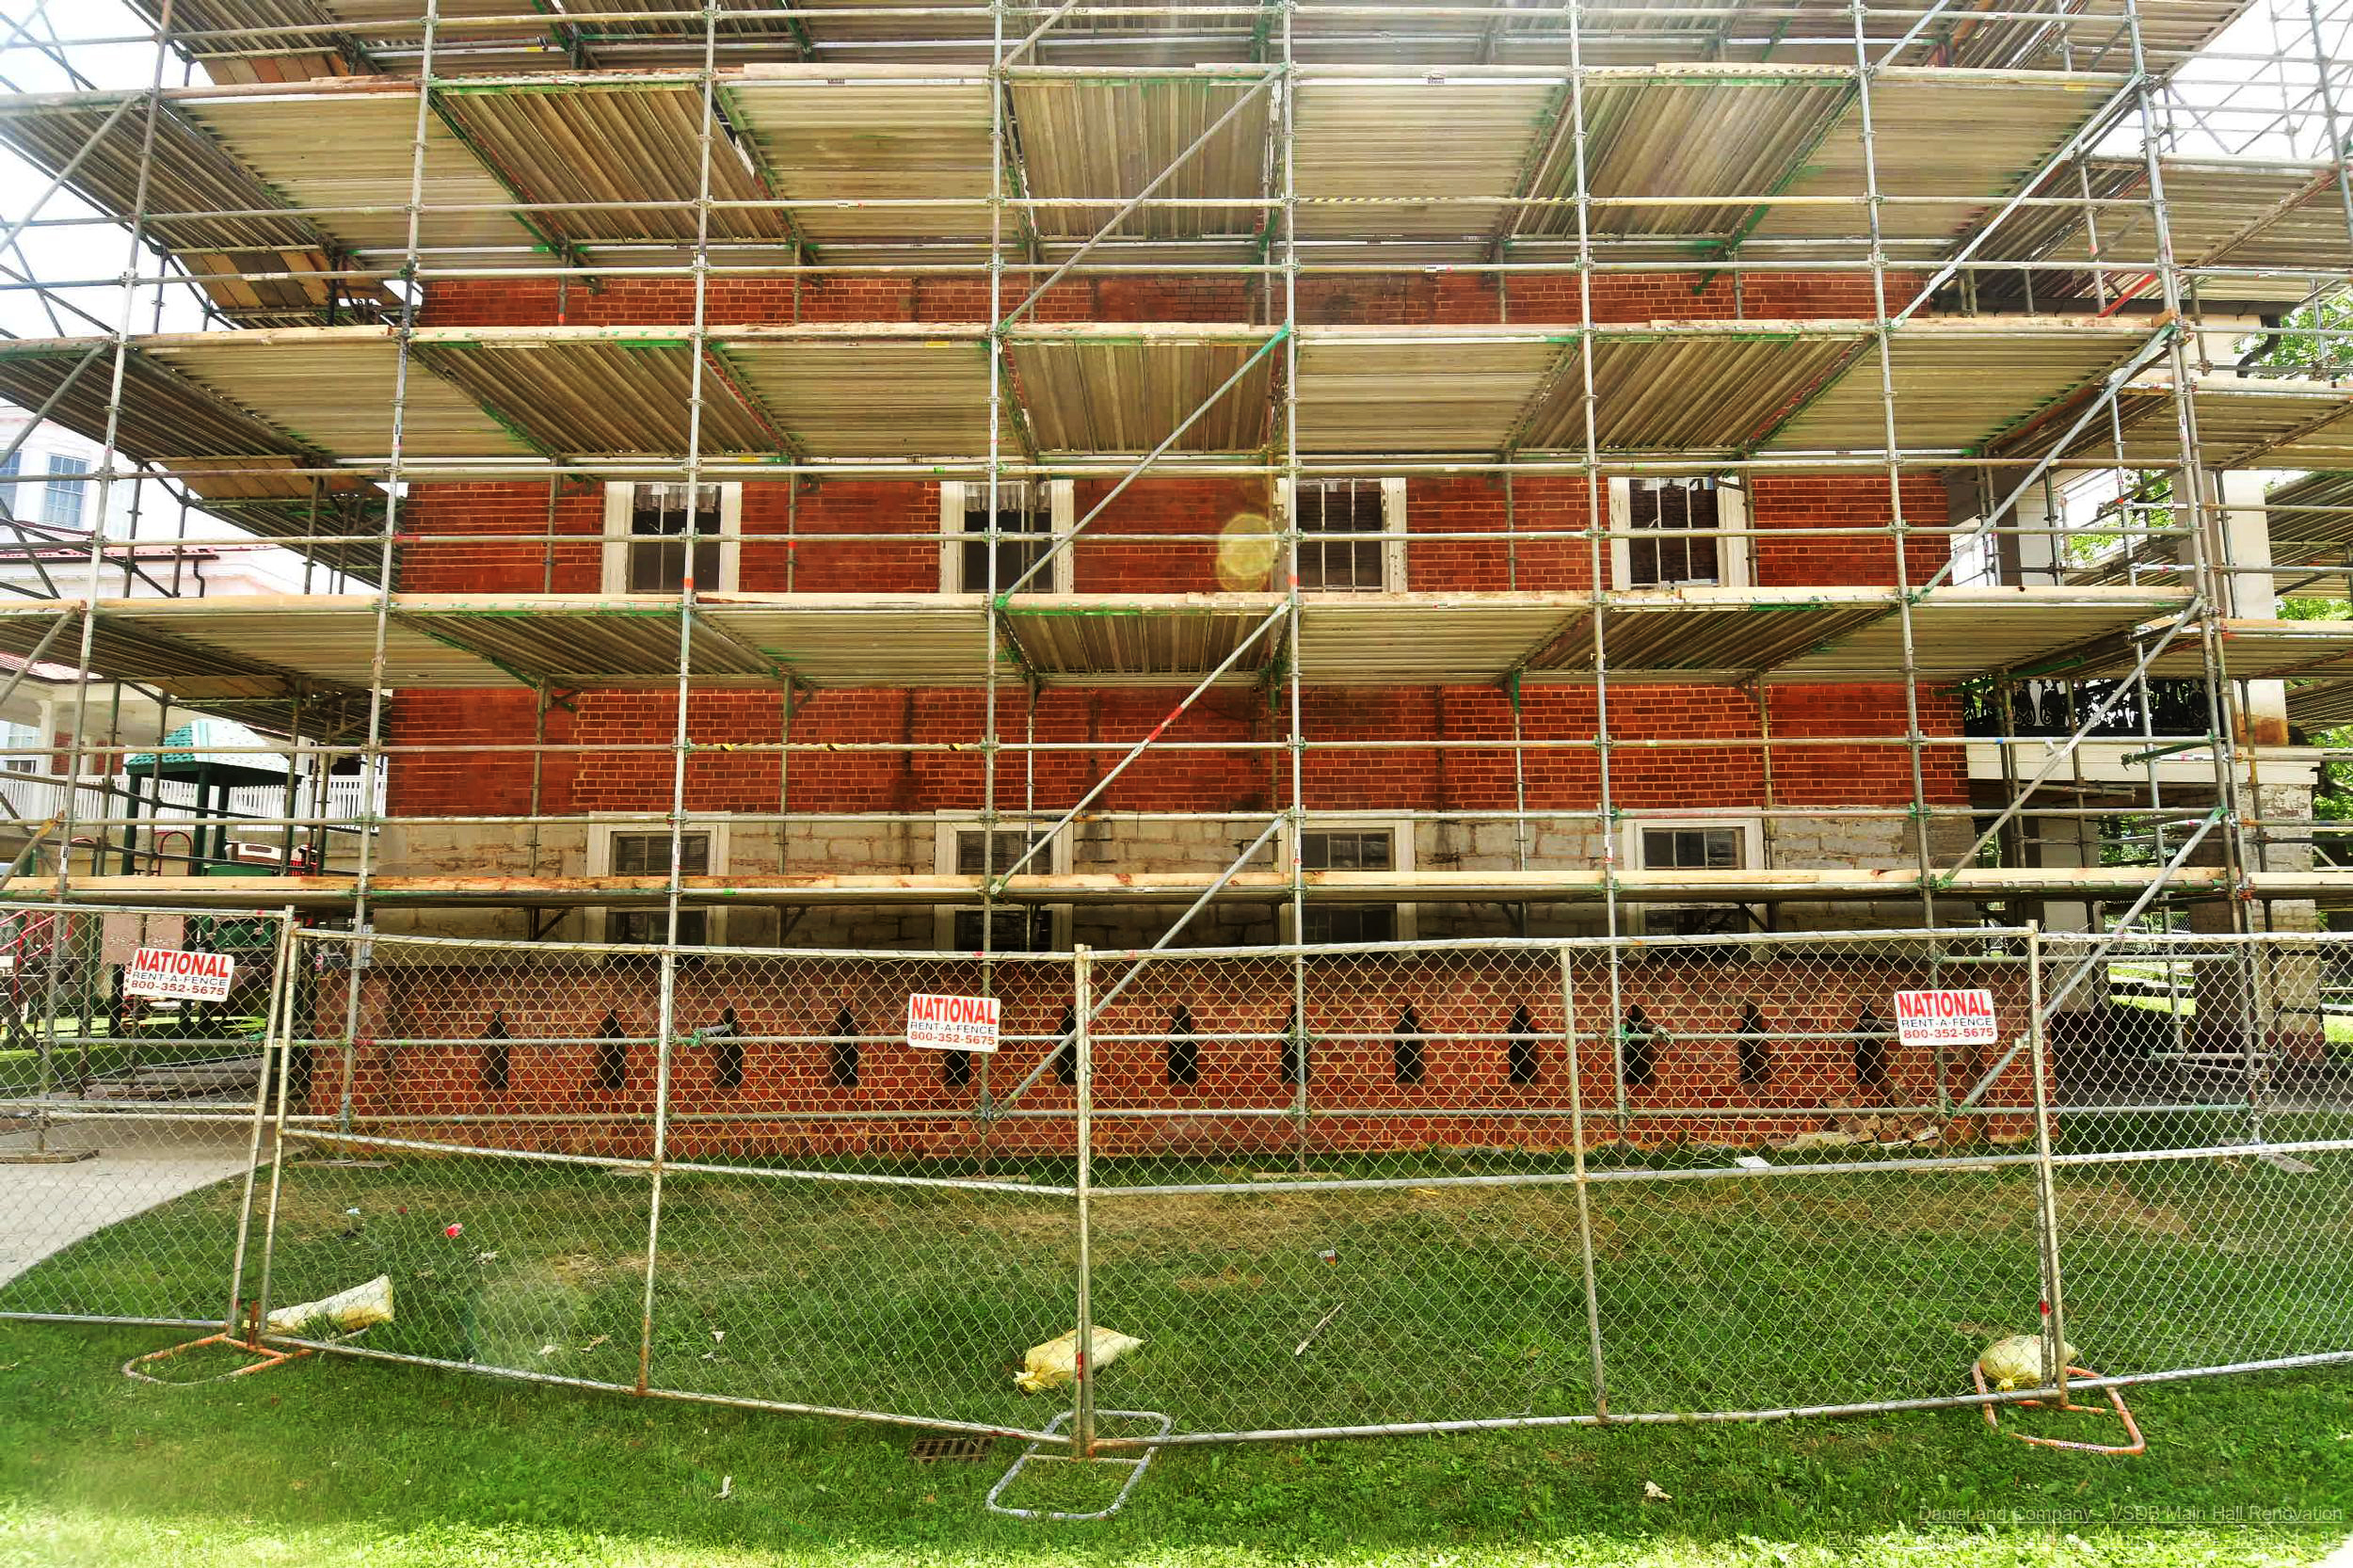 8/10/2021 - Beginning construction on the Main Hall